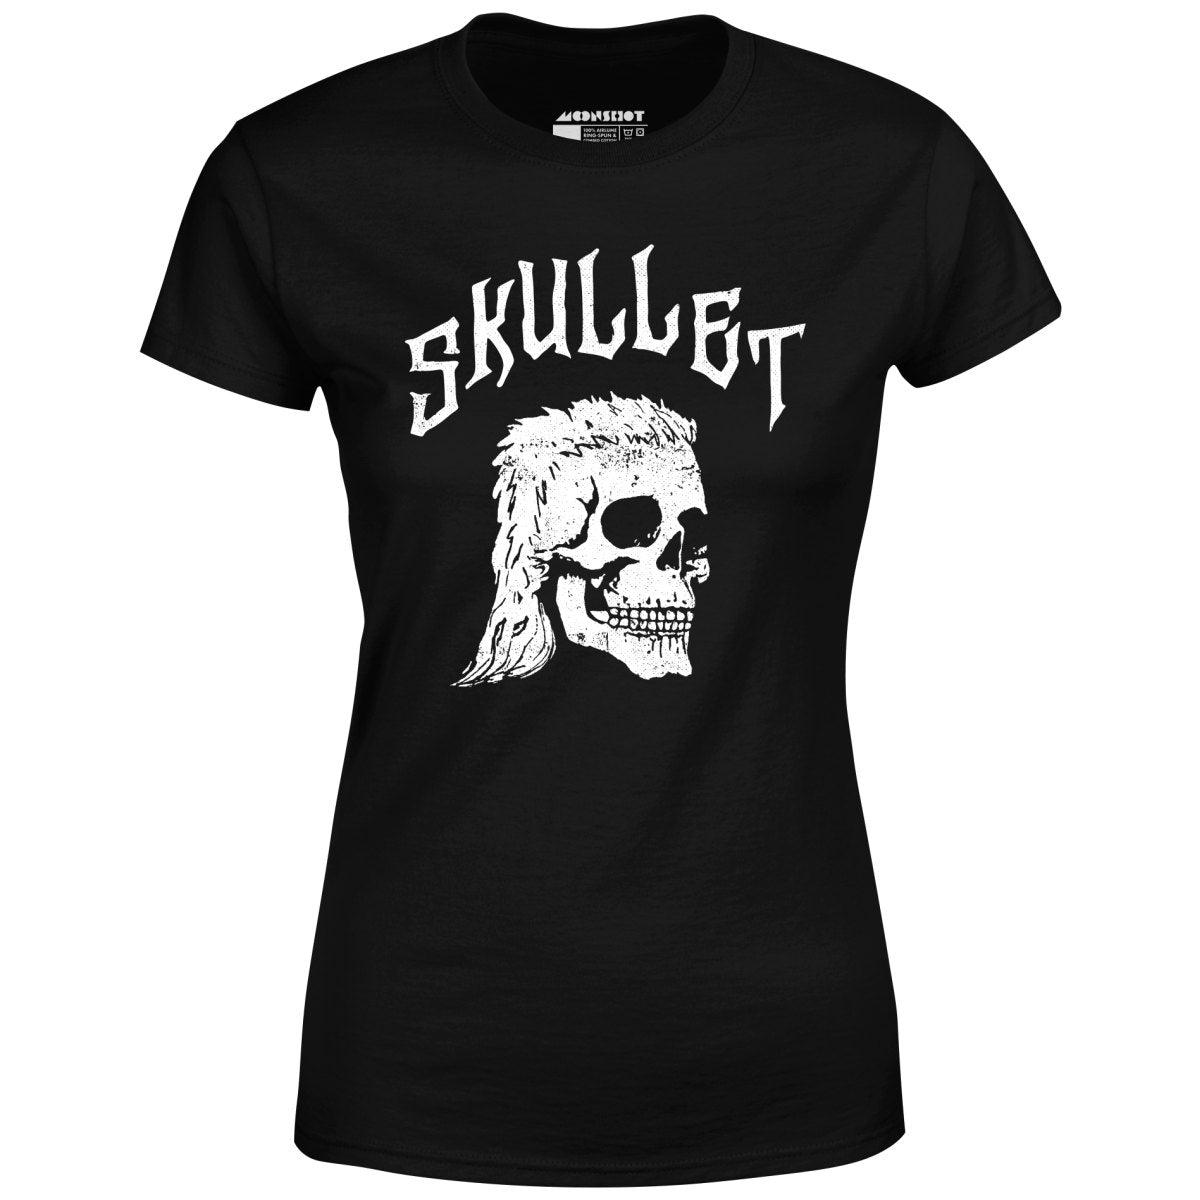 Skullet - Women's T-Shirt